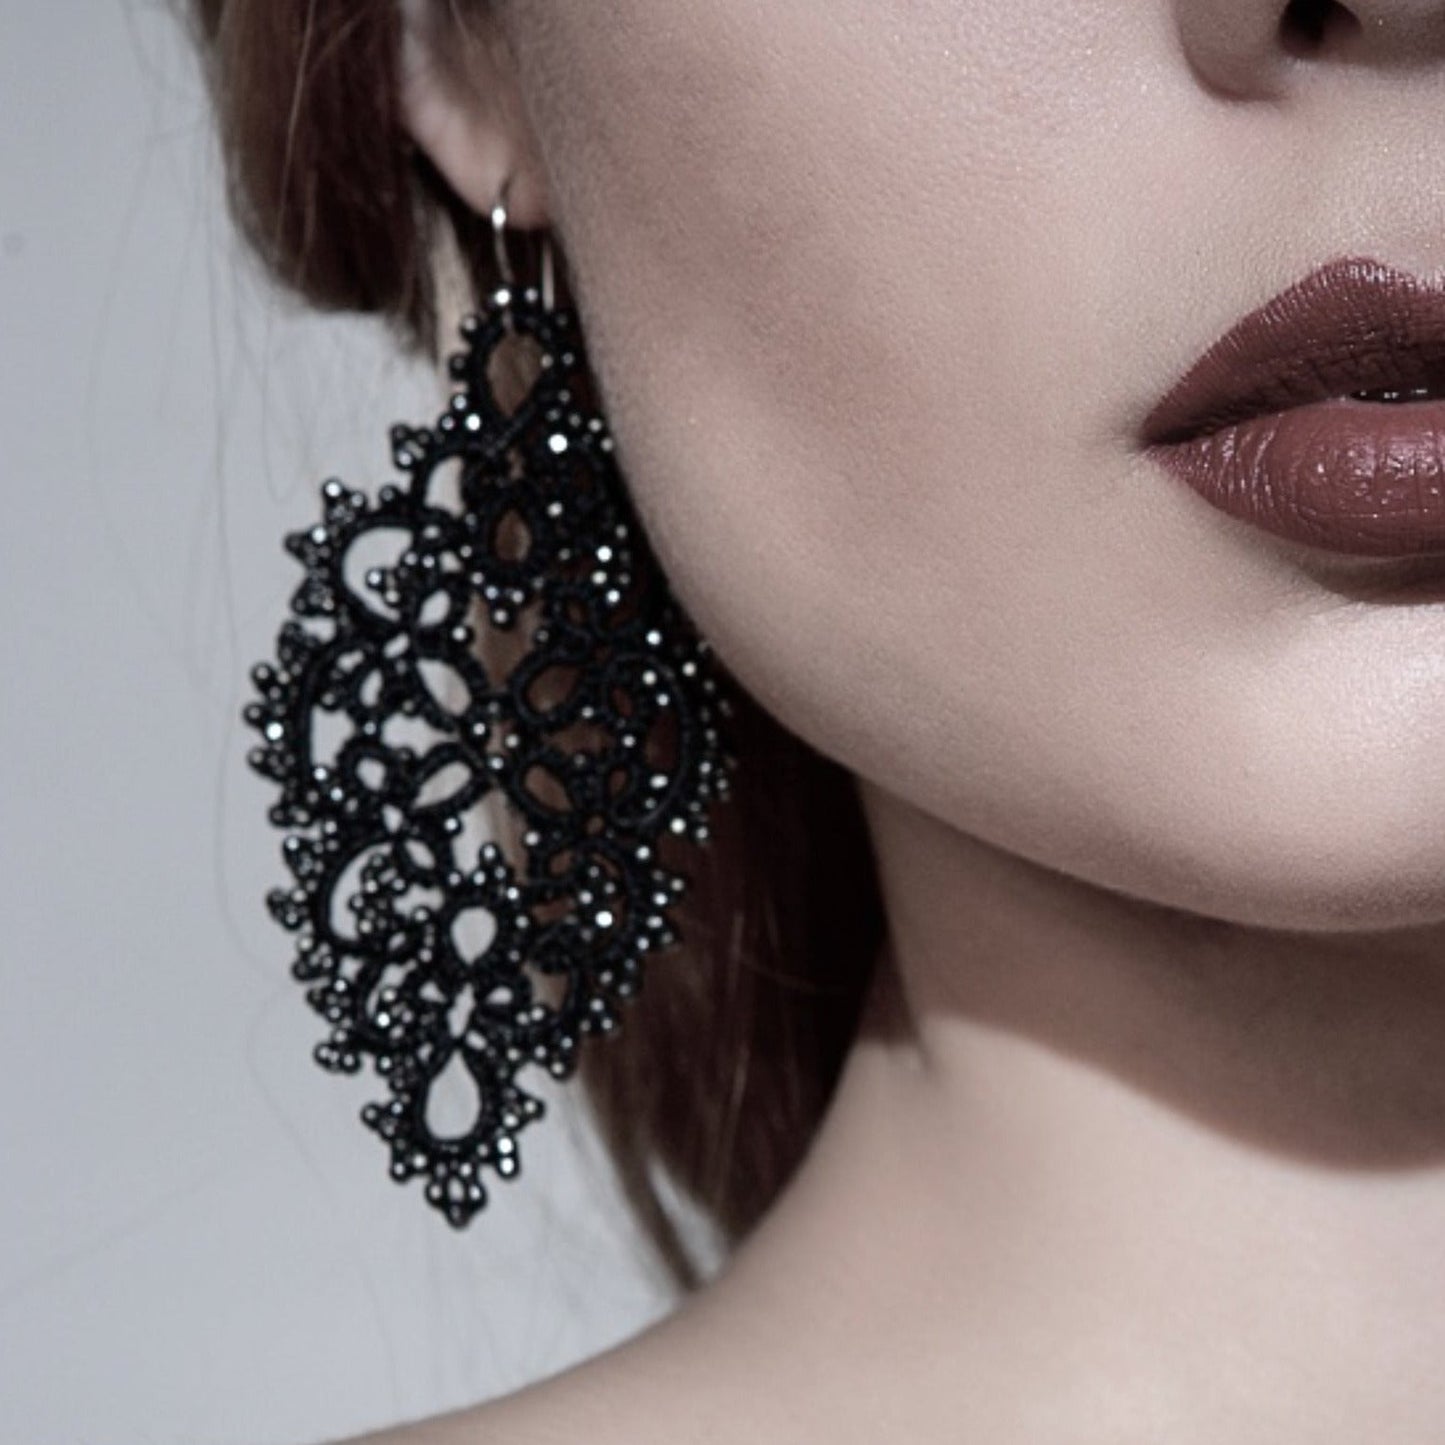 Diana lace earrings, olive dark grey